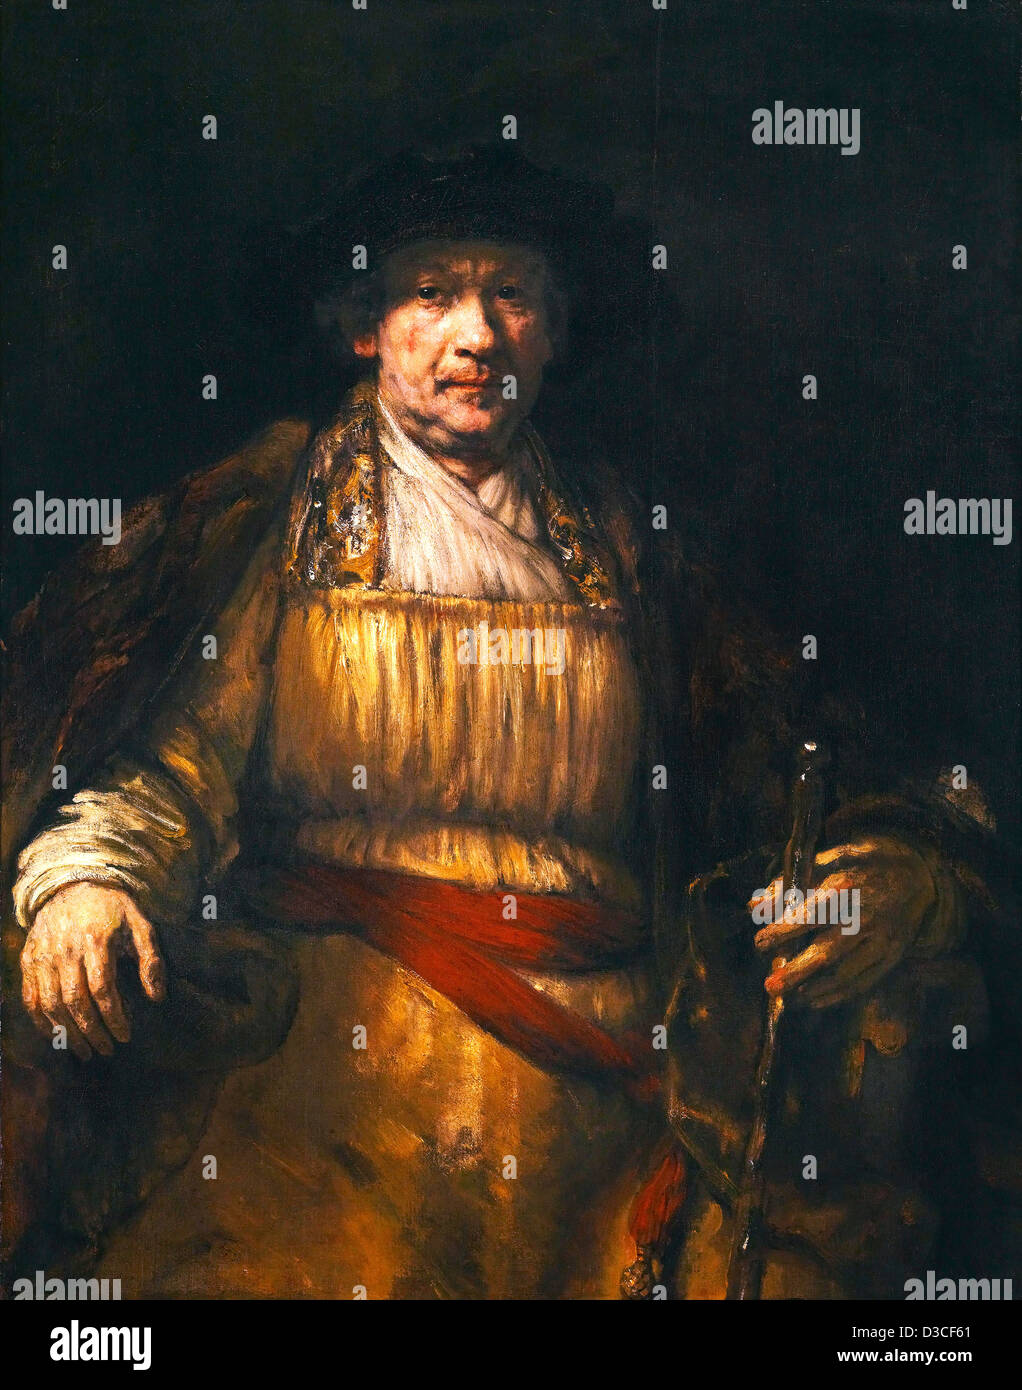 Rembrandt van Rijn, Selbstbildnis. 1658 Öl auf Leinwand. Frick Collection, New York. Stockfoto